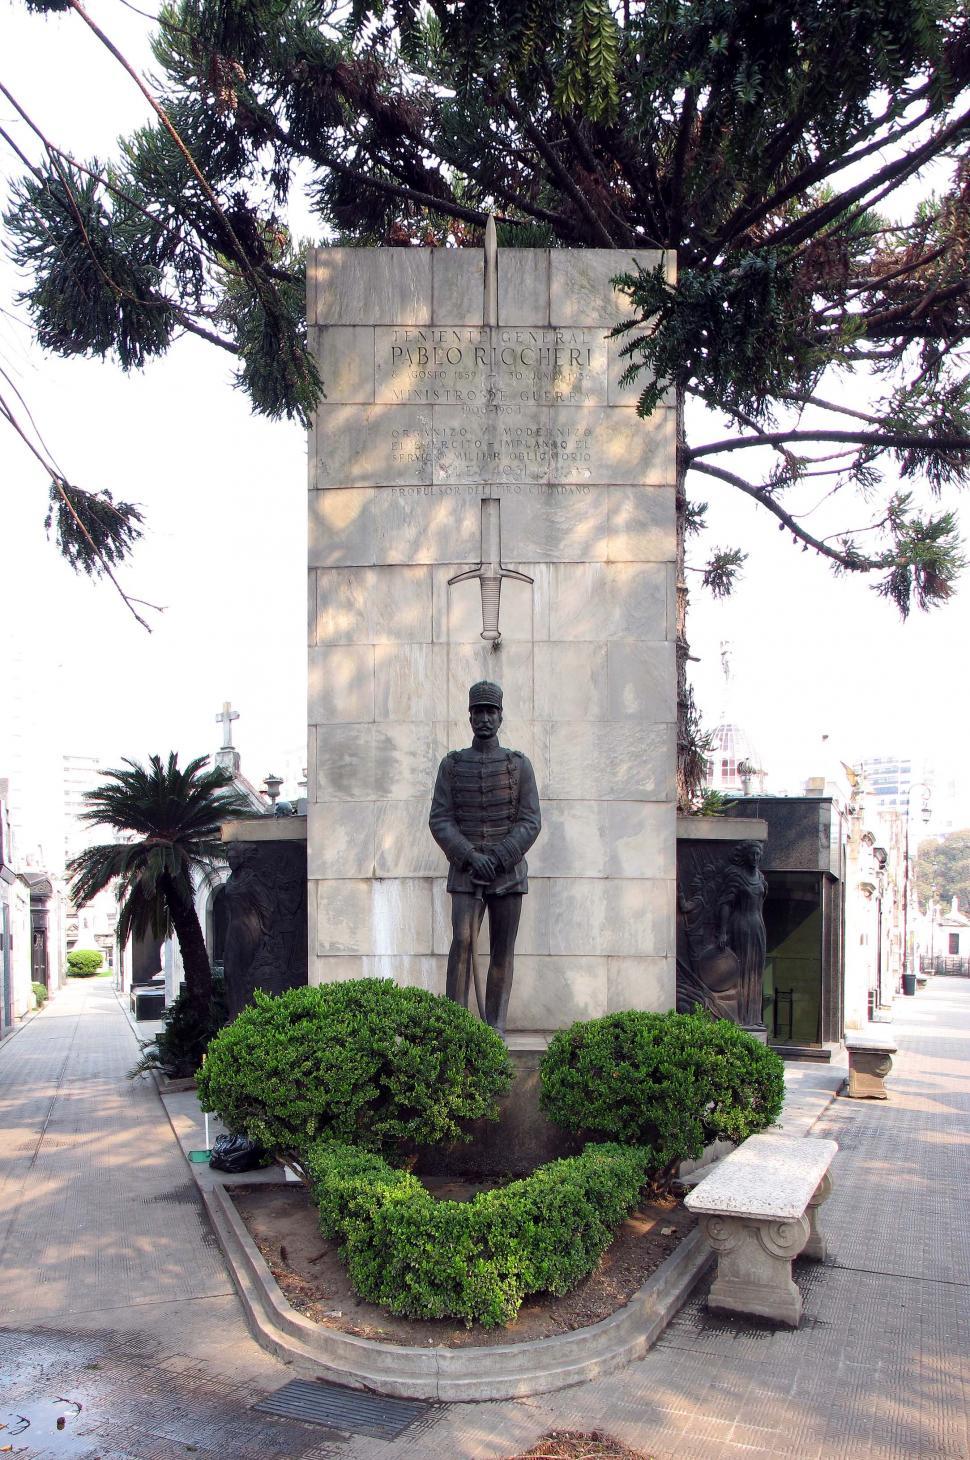 Free Image of Pablo Riccheri Statue 